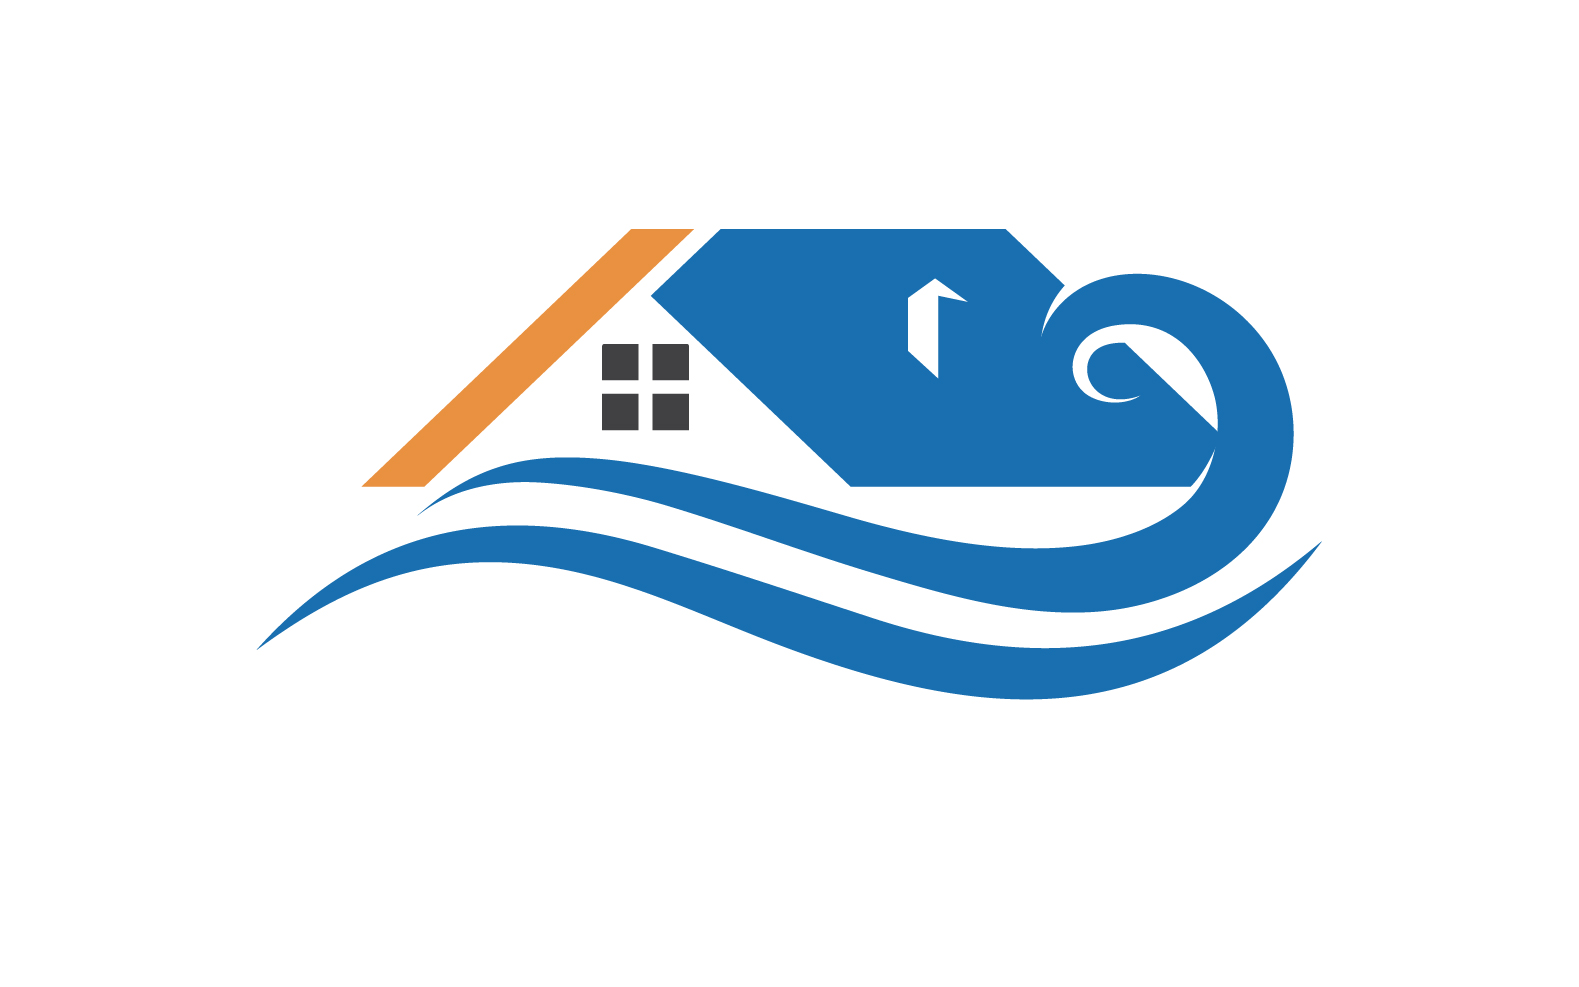 Home building property sell logo vector v4